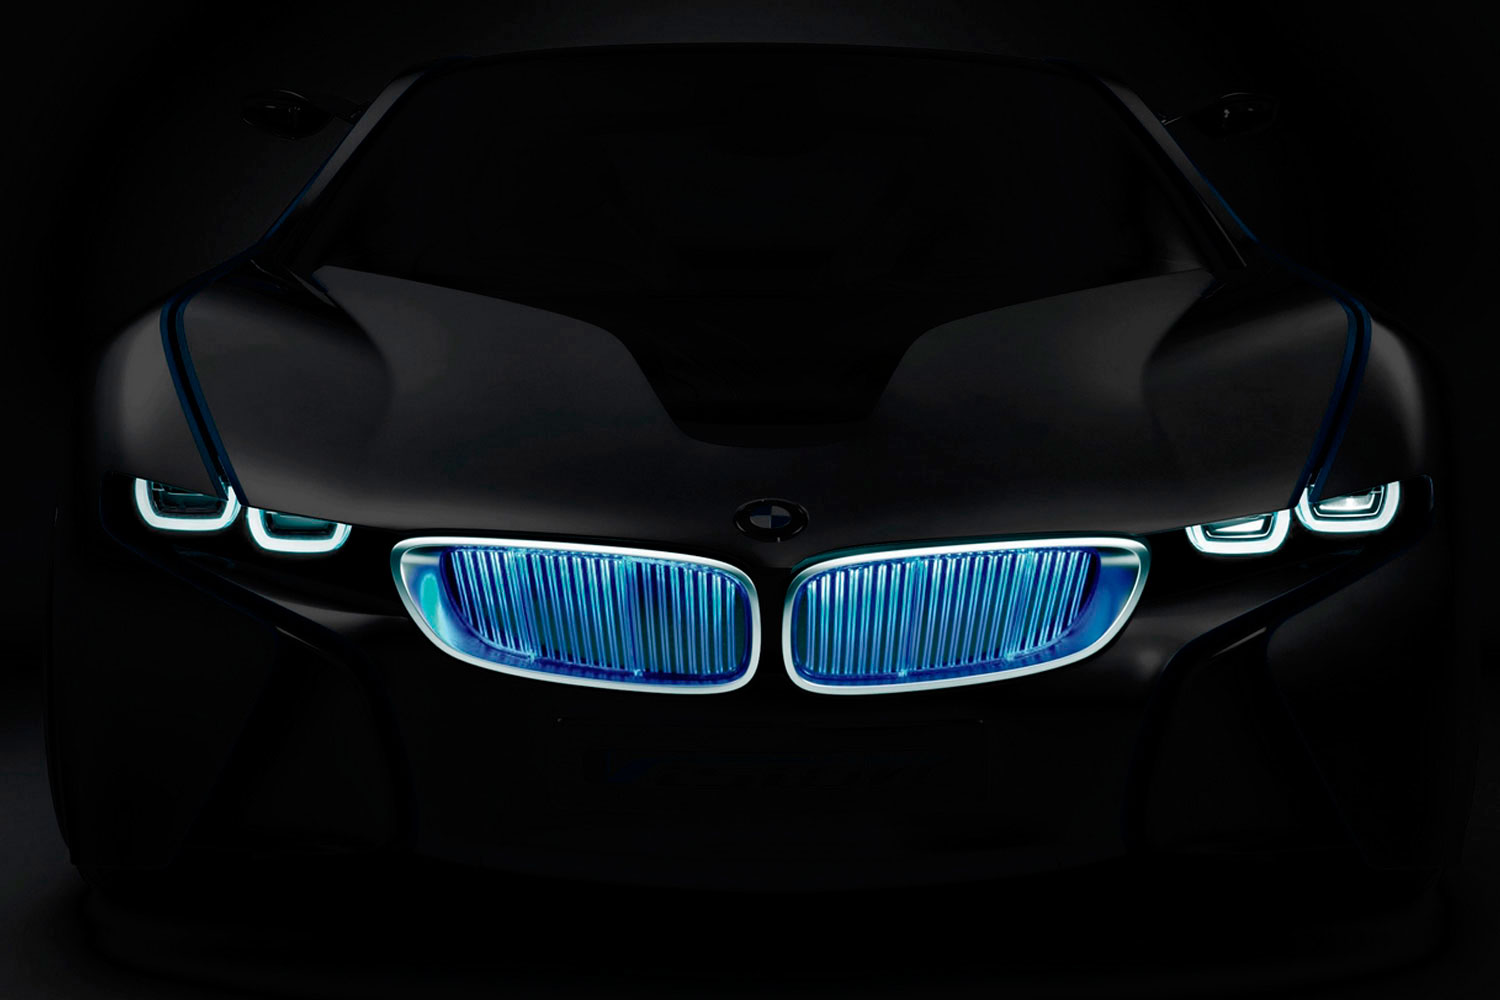 El modelo BMW i8 incorpora un sistema de alumbrado láser